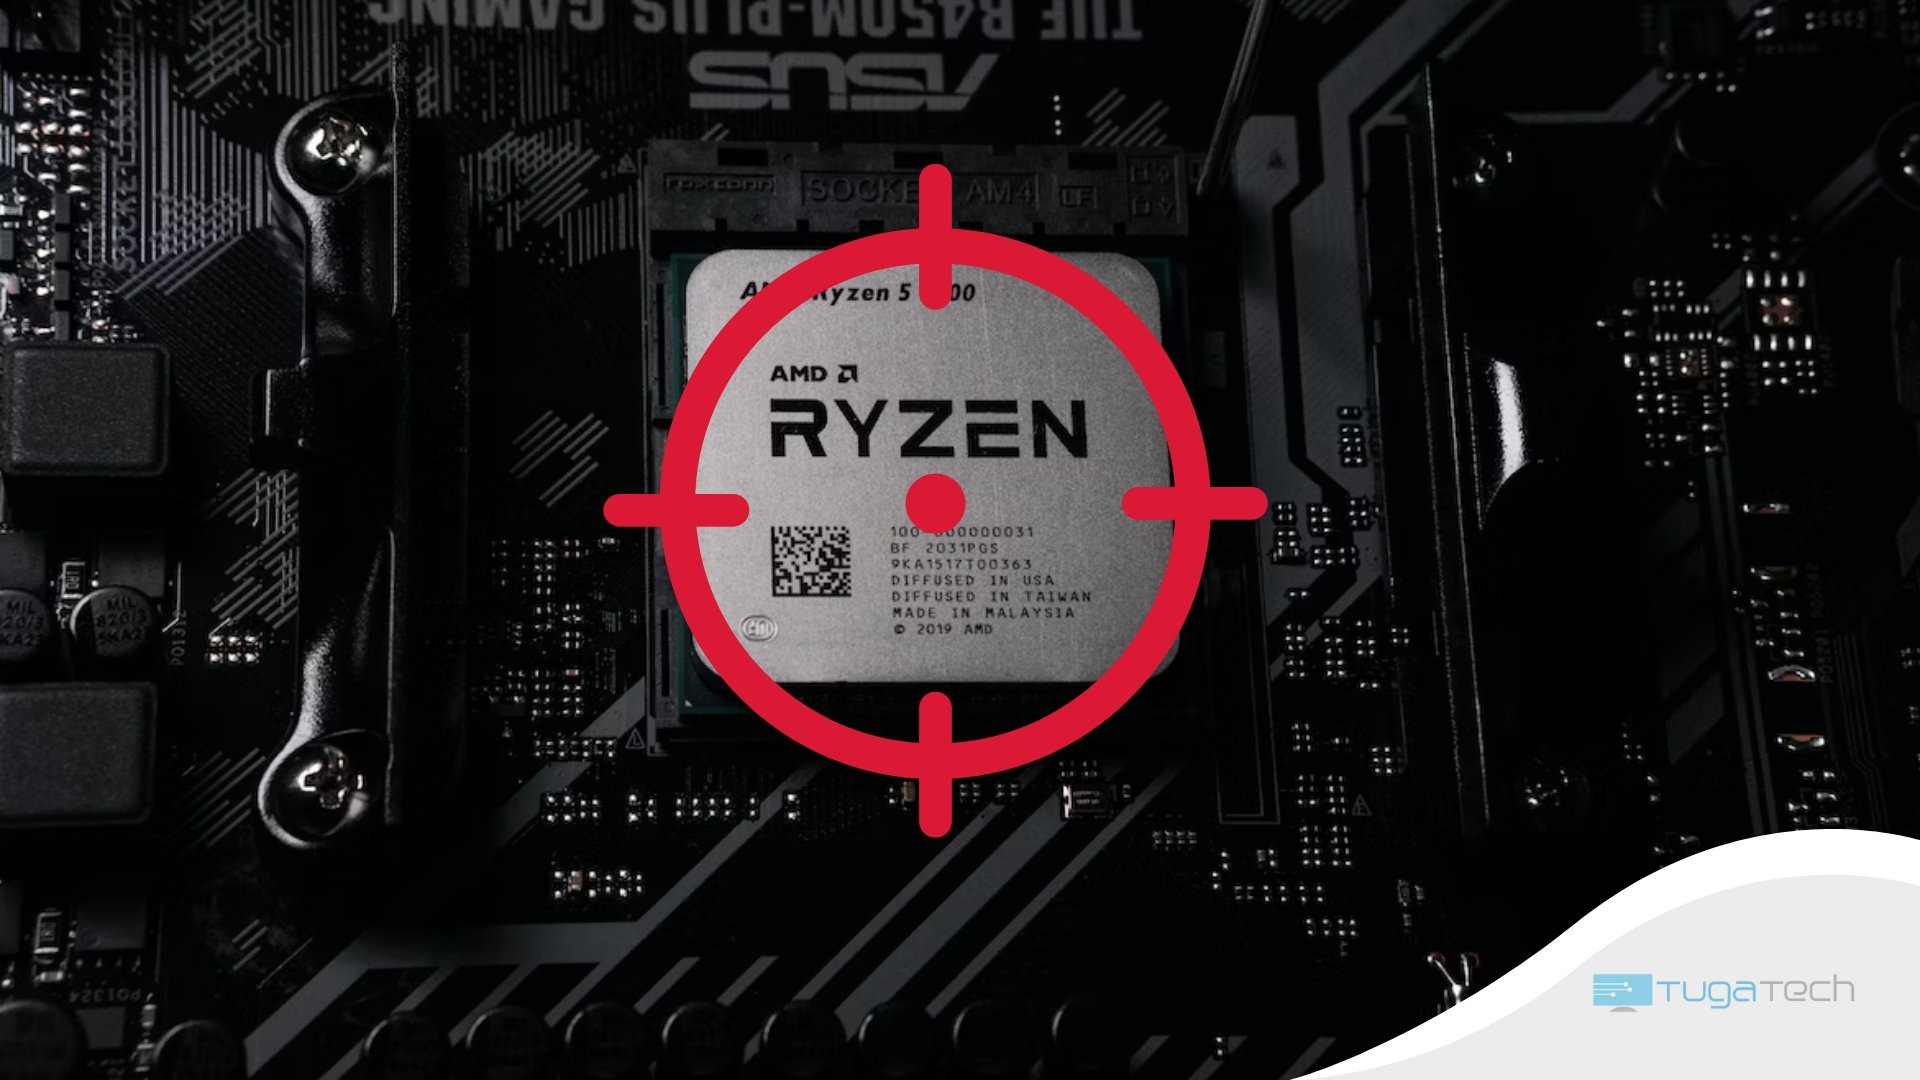 AMD Ryzen processador sobre mira